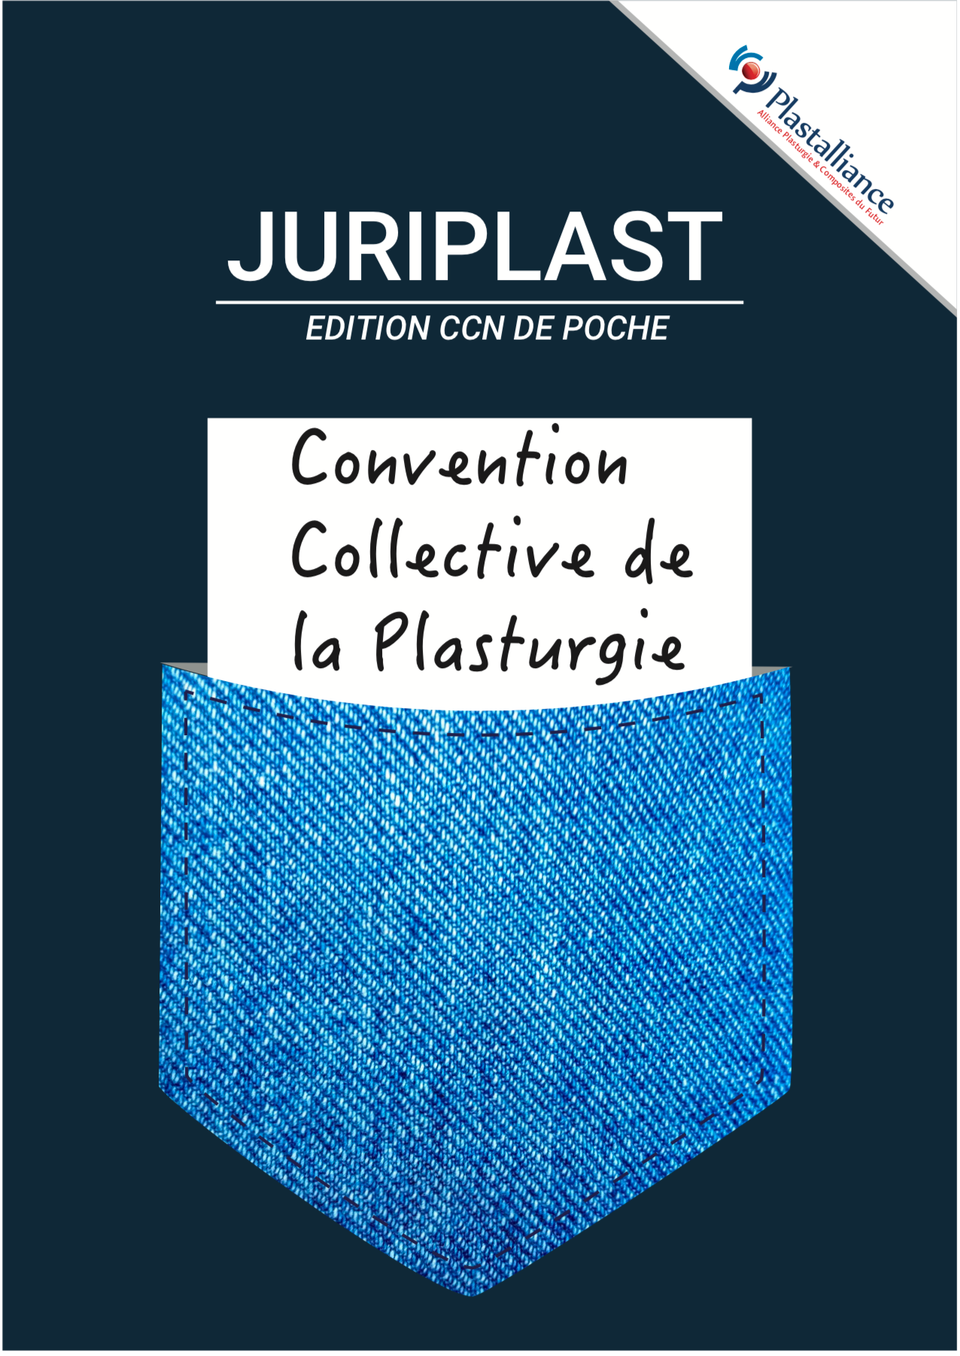 convention-collective-plasturgie